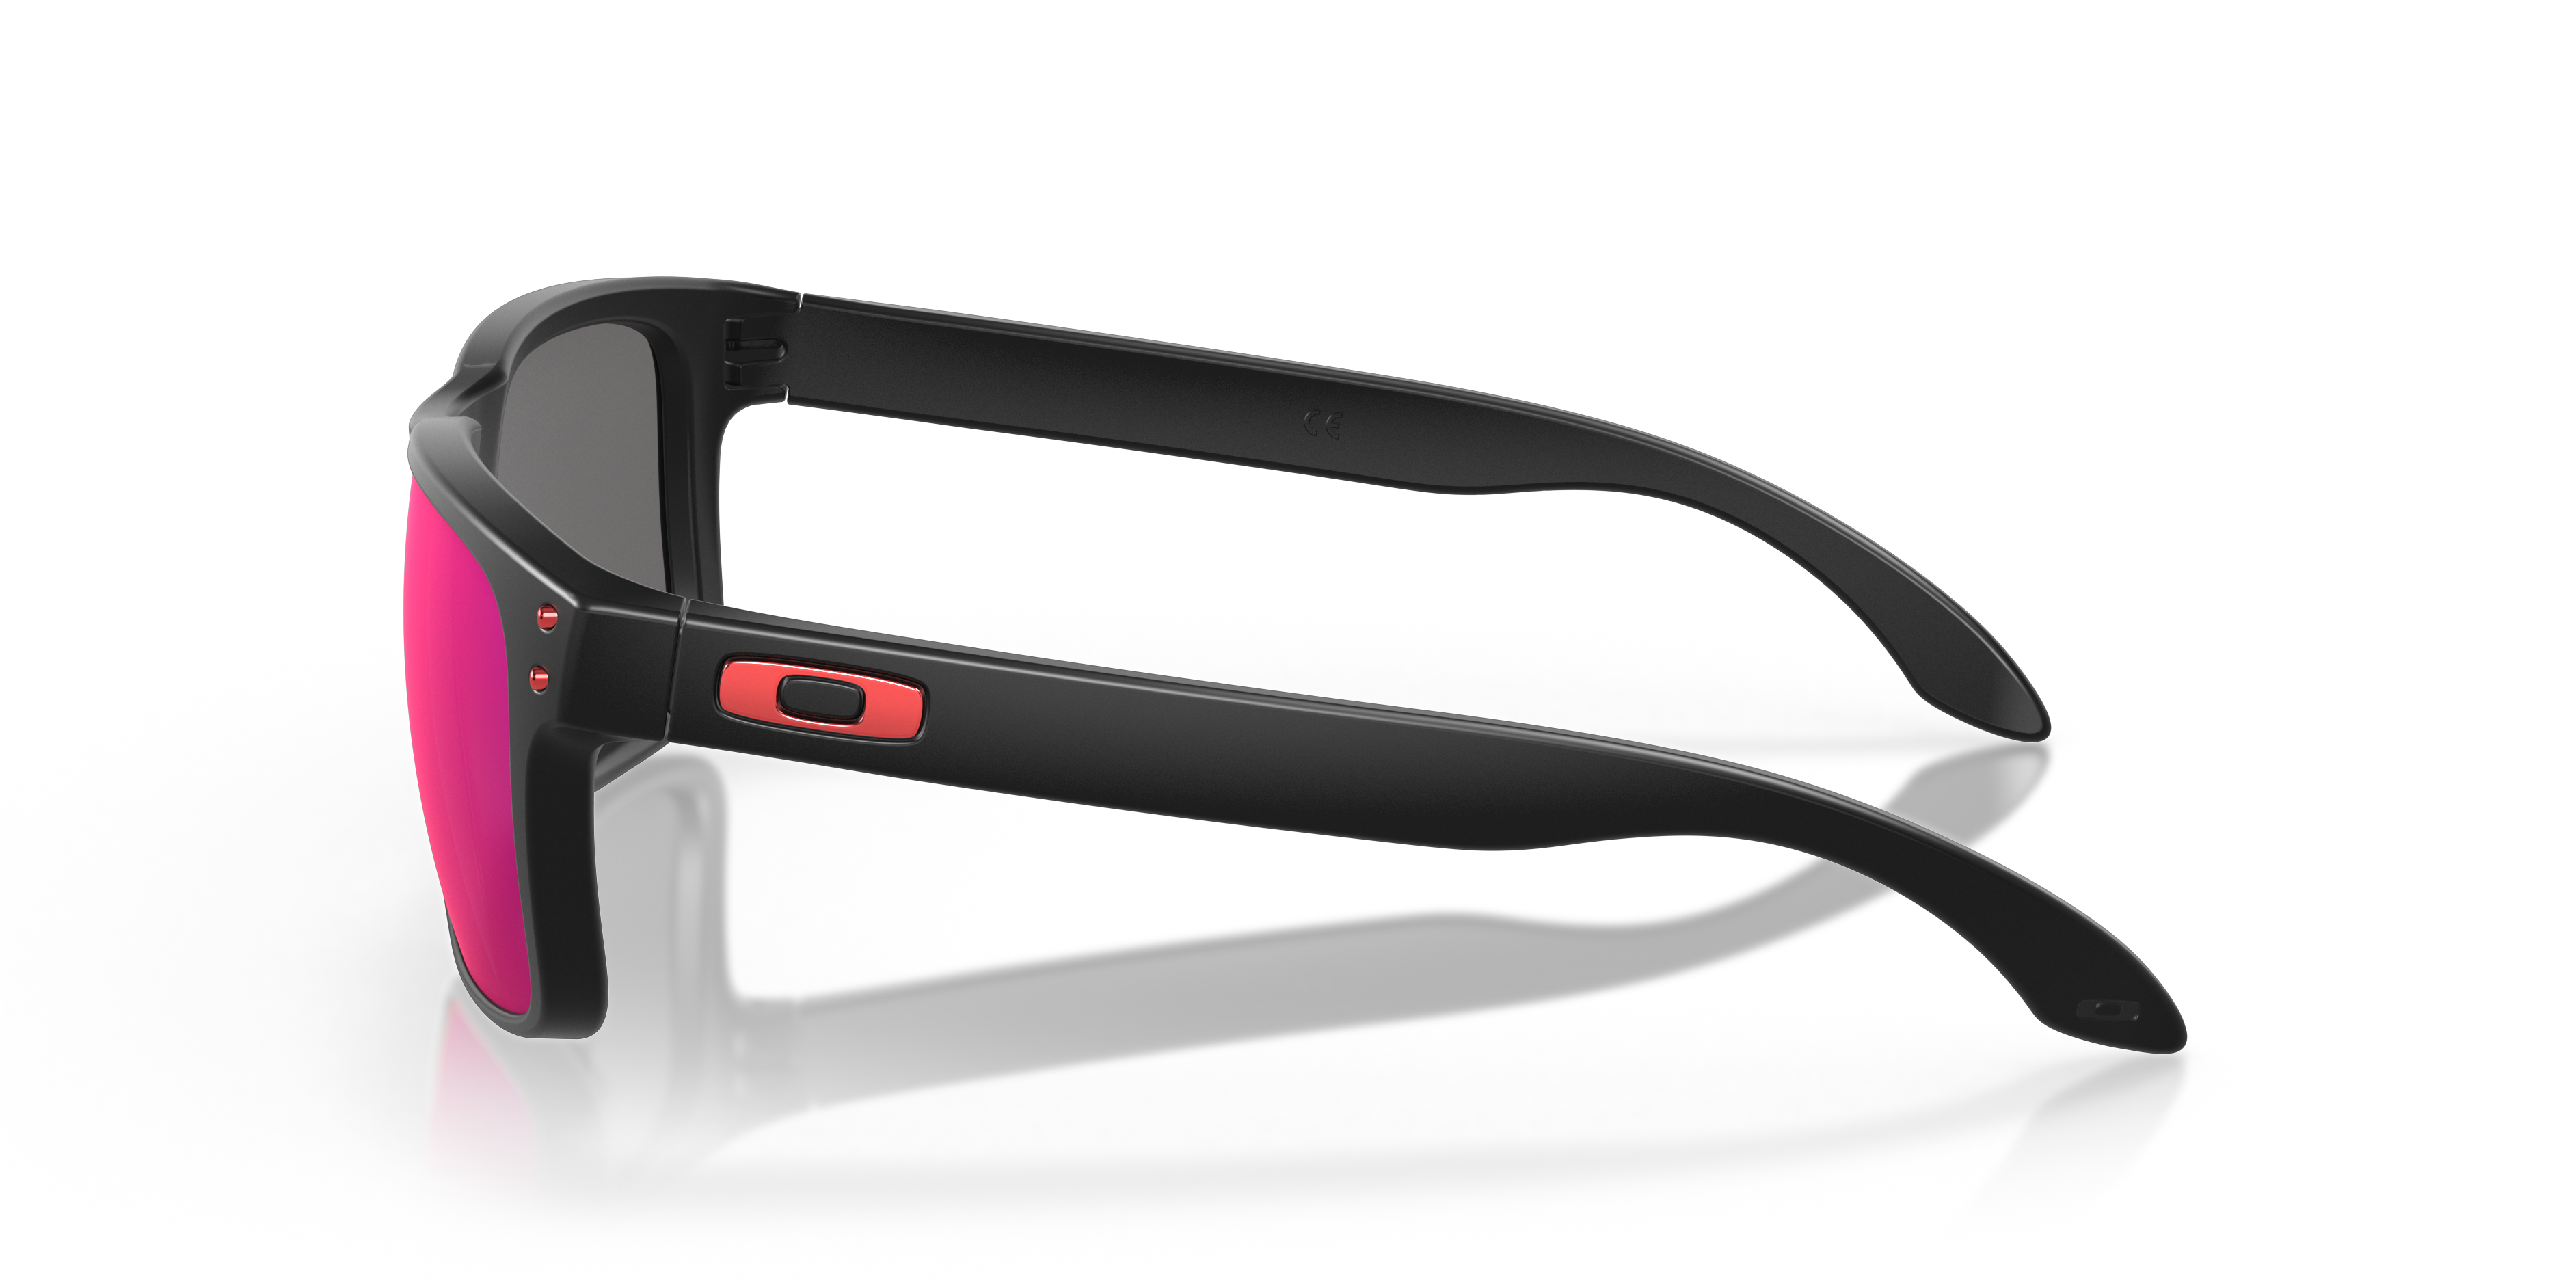 Oakley OO9236-02 Sunglasses Valve Positive Red Iridium Lens